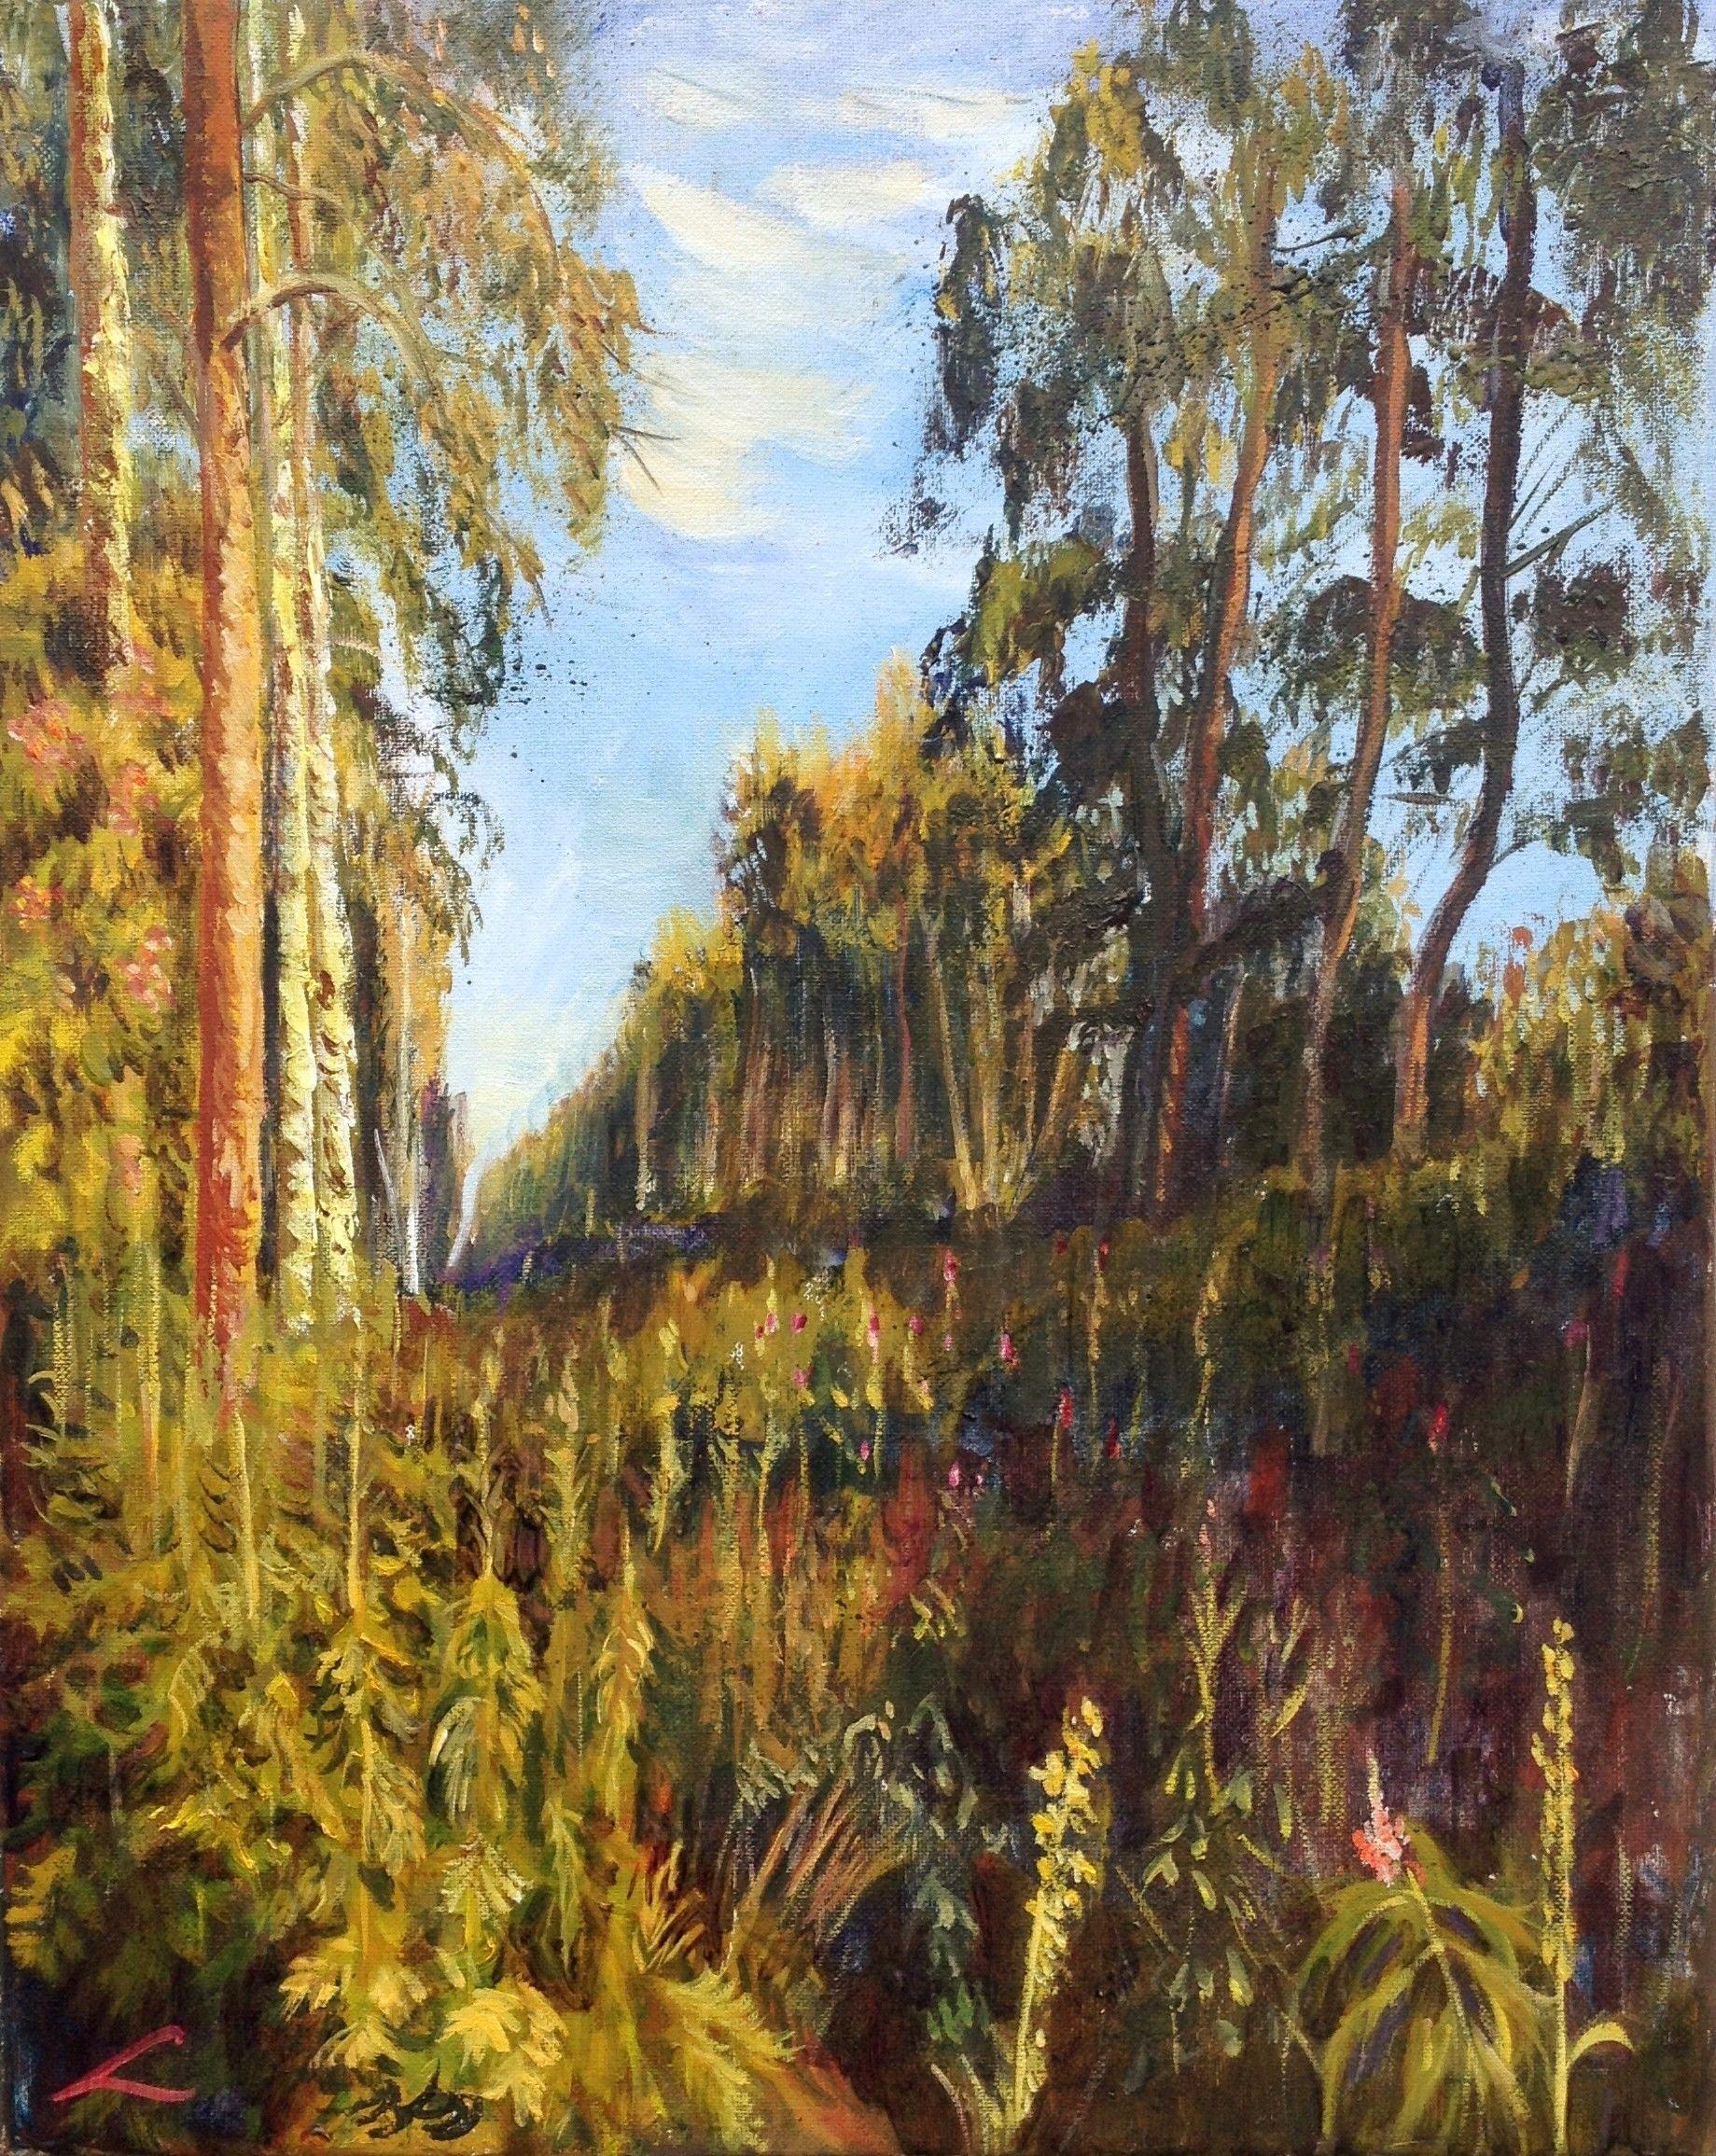 Elena Sokolova Landscape Painting – Forest way in the evening light, Gemälde, Öl auf Leinwand